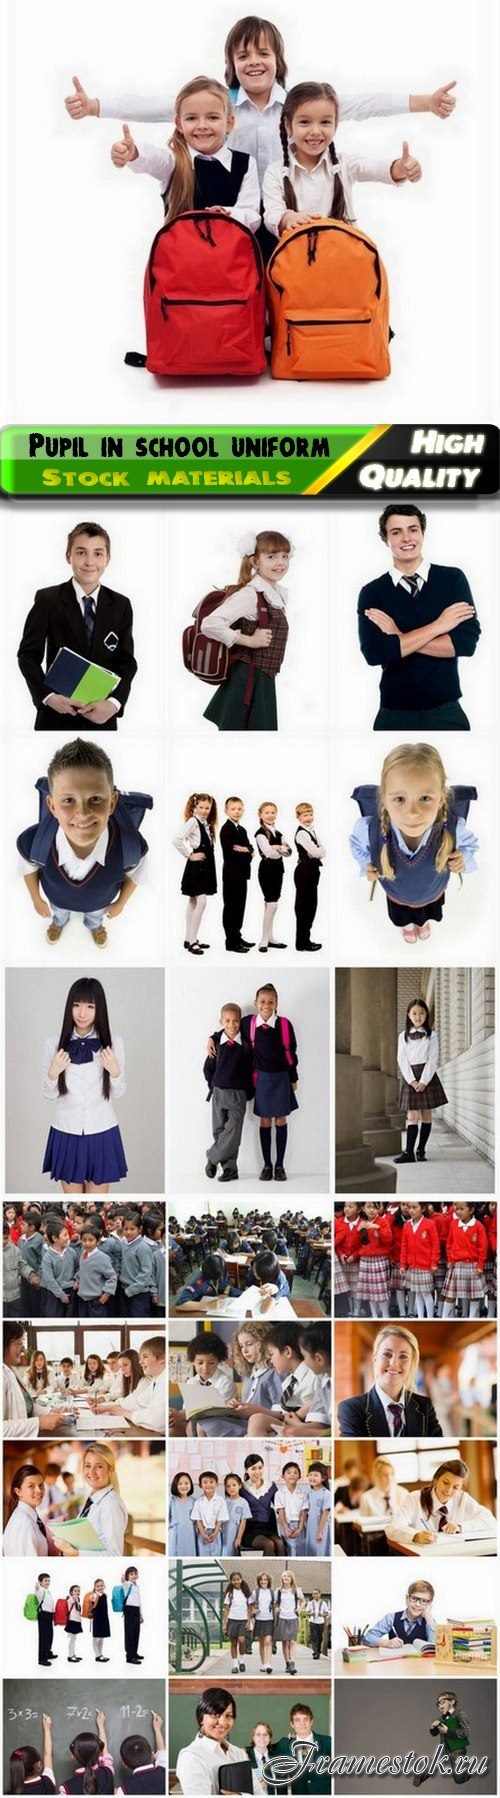 Education kids and pupil in school uniform - 25 HQ Jpg